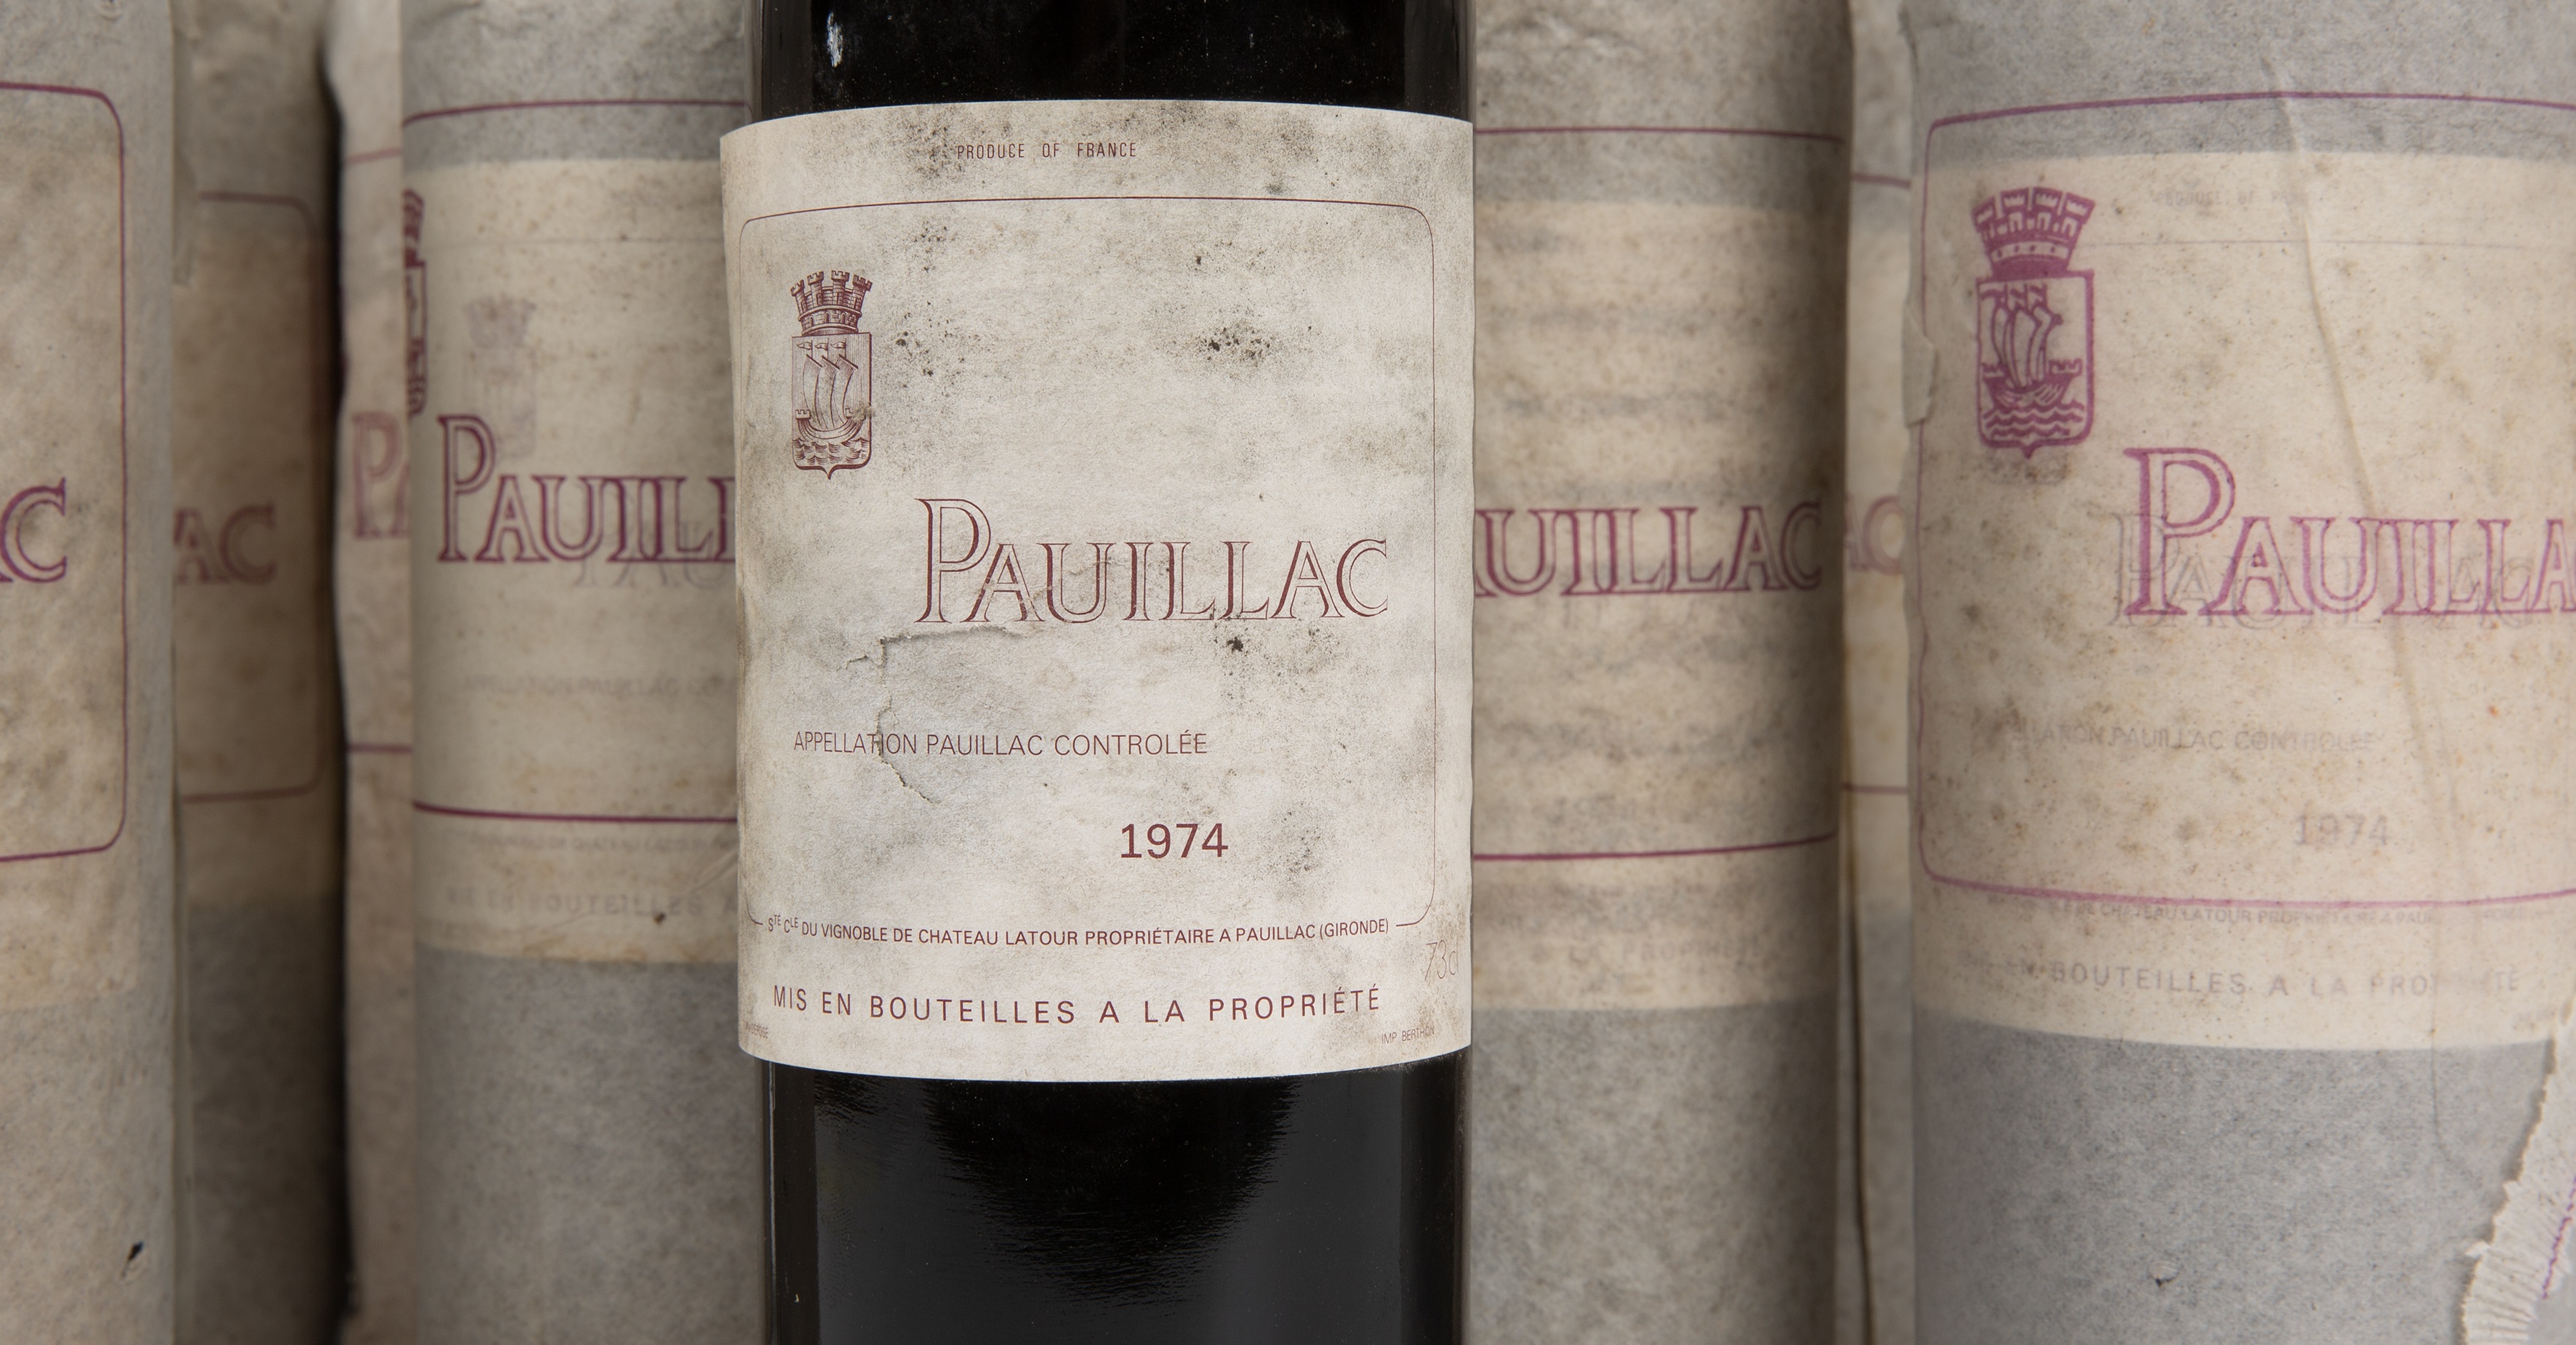 Twelve bottles of 1974 Pauillac, France - Image 2 of 2